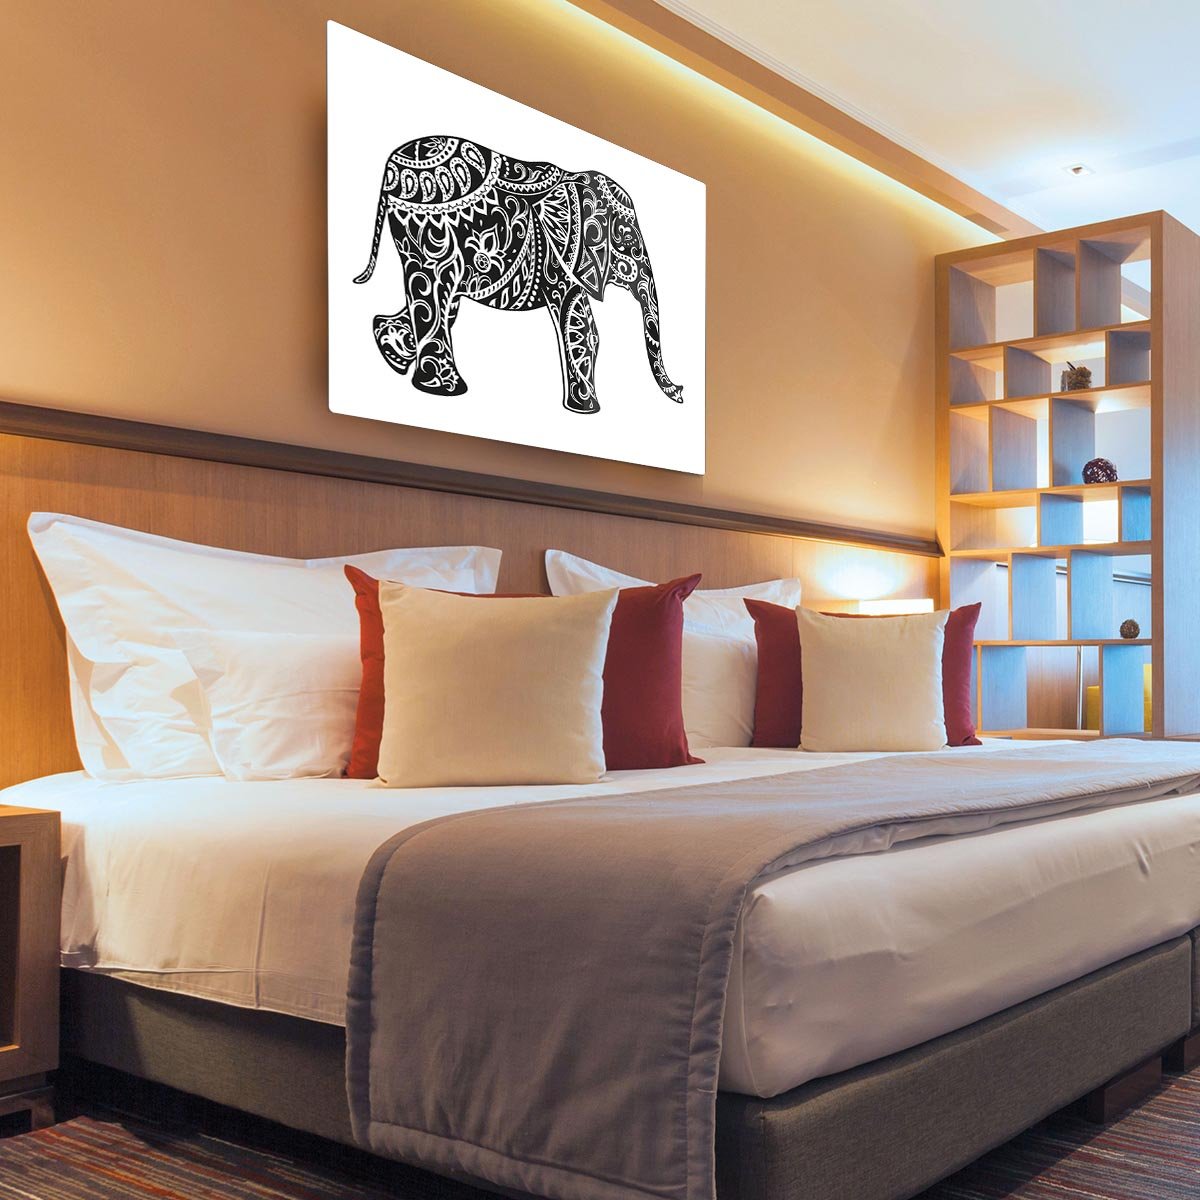 The stylized figure of an elephant in the festive patterns HD Metal Print - Canvas Art Rocks - 3